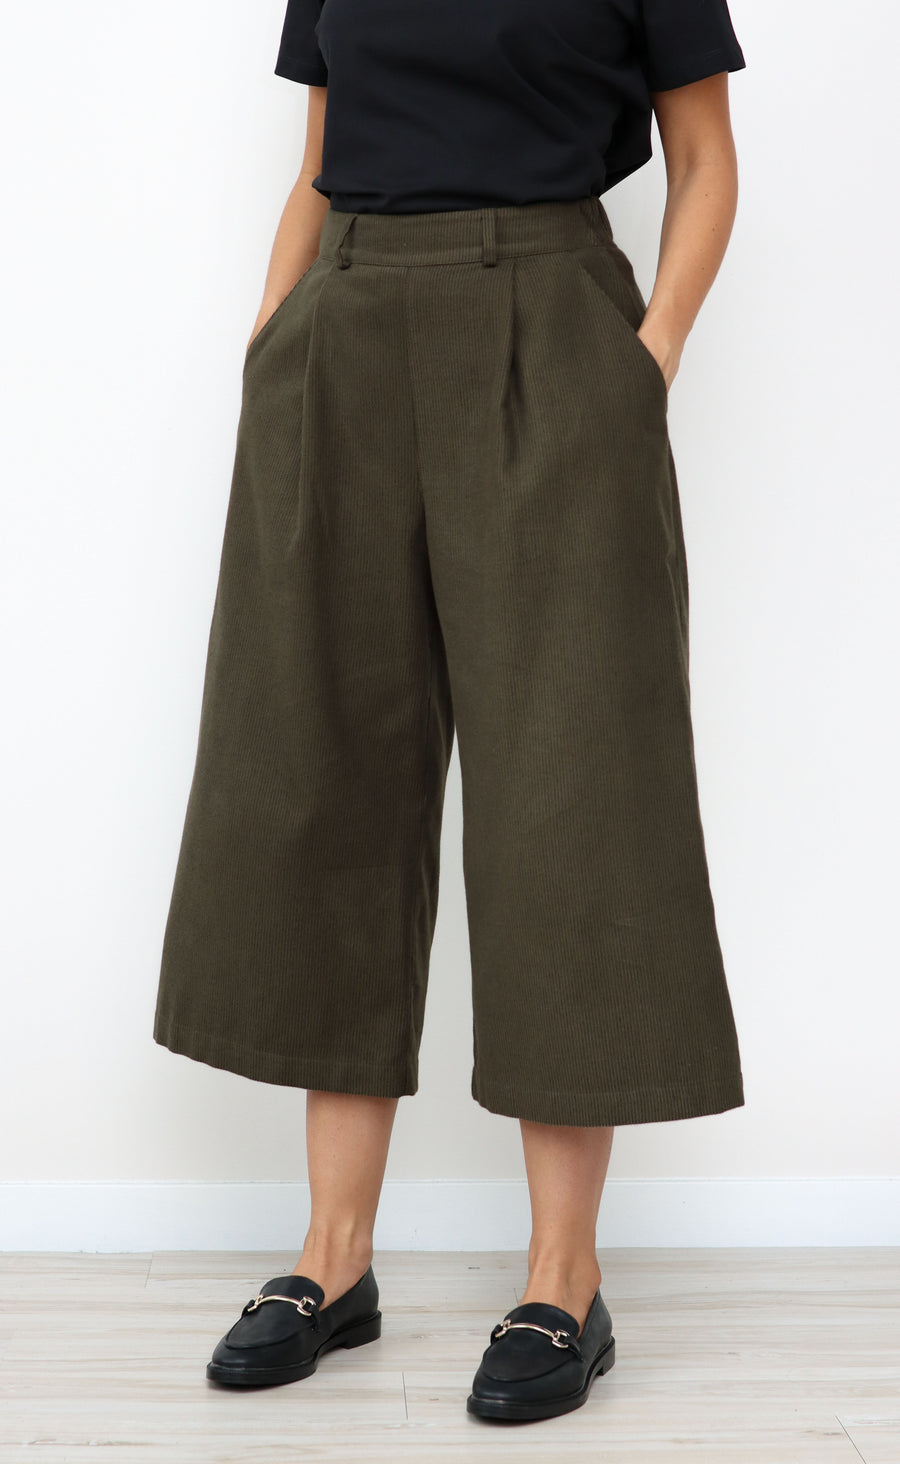 The Minimalist - Olive Wayward Fit Pants